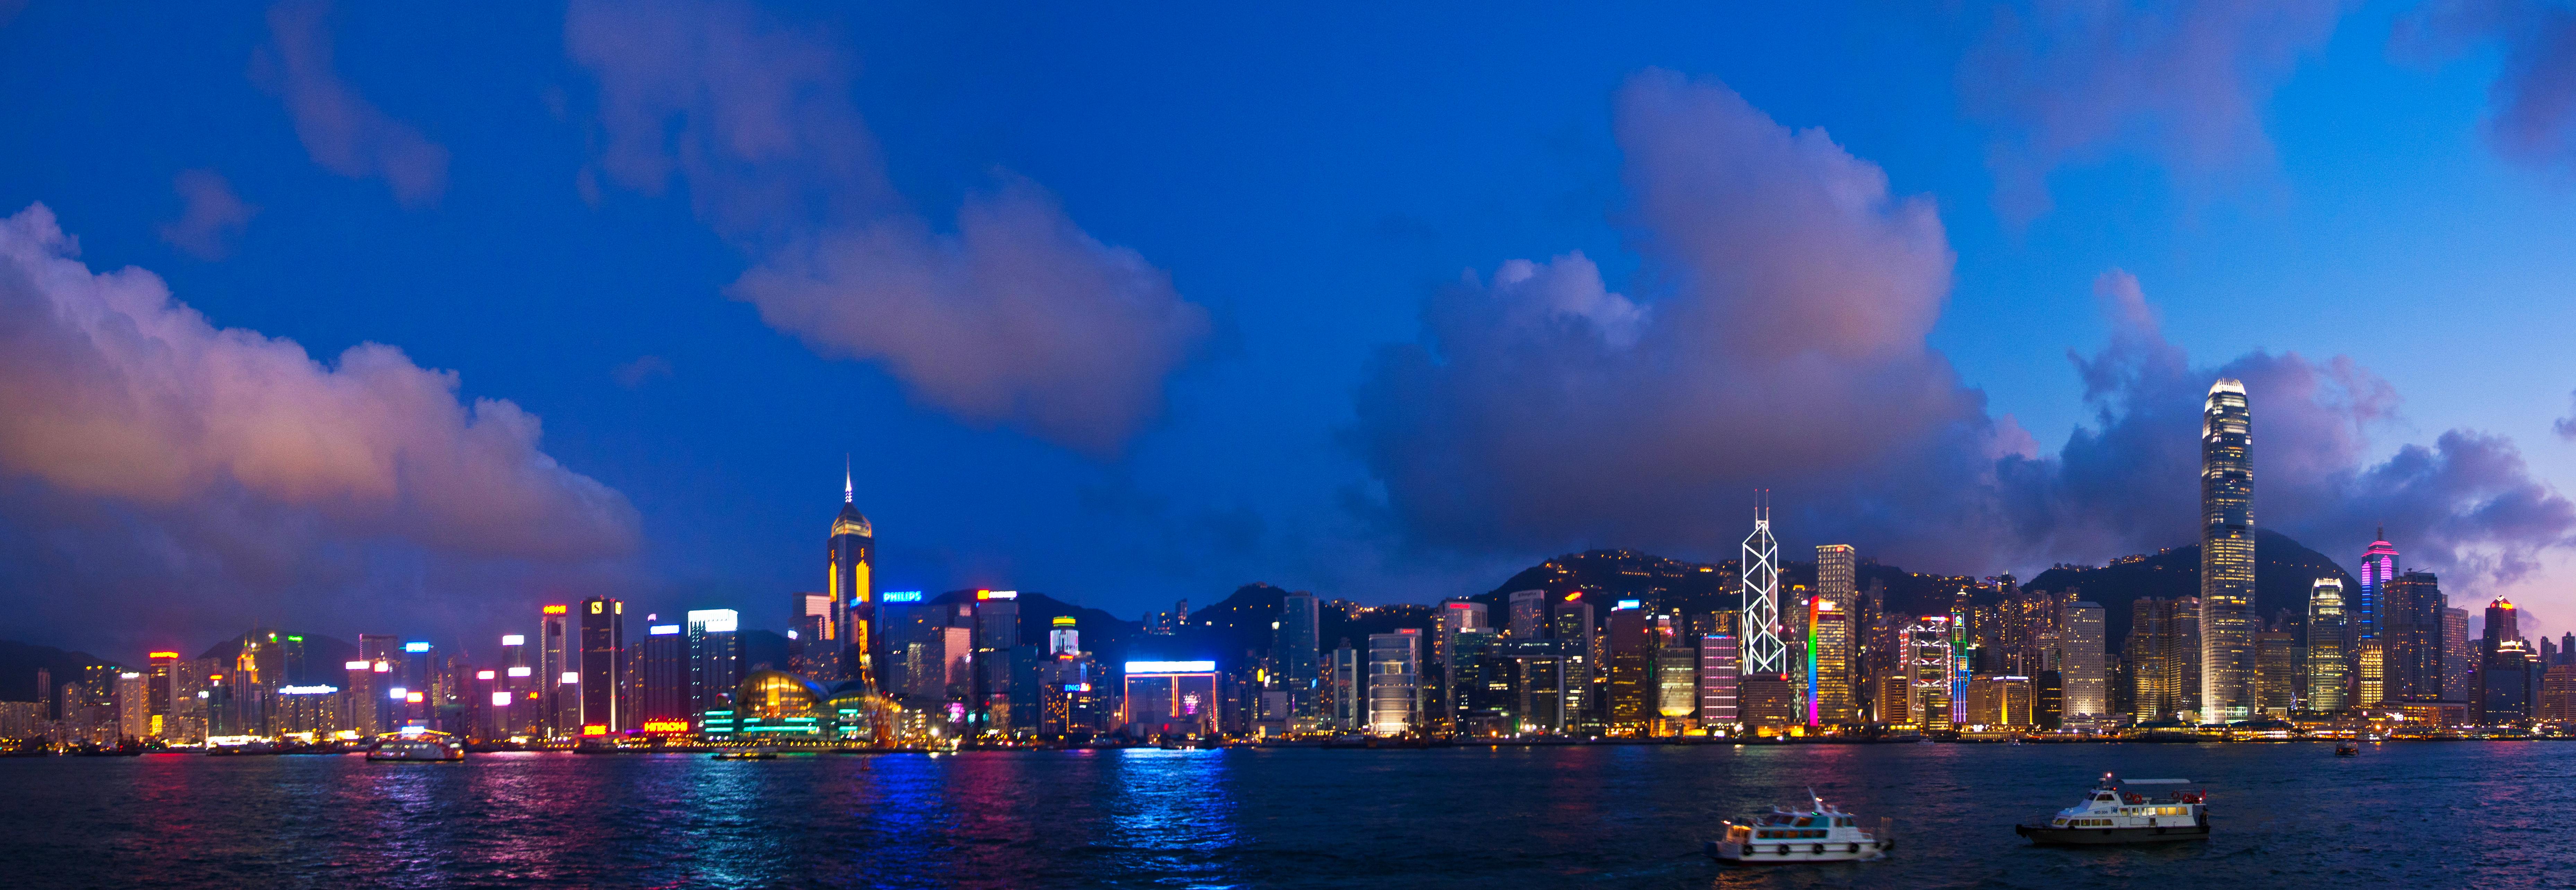 Panorama HK 2011 6